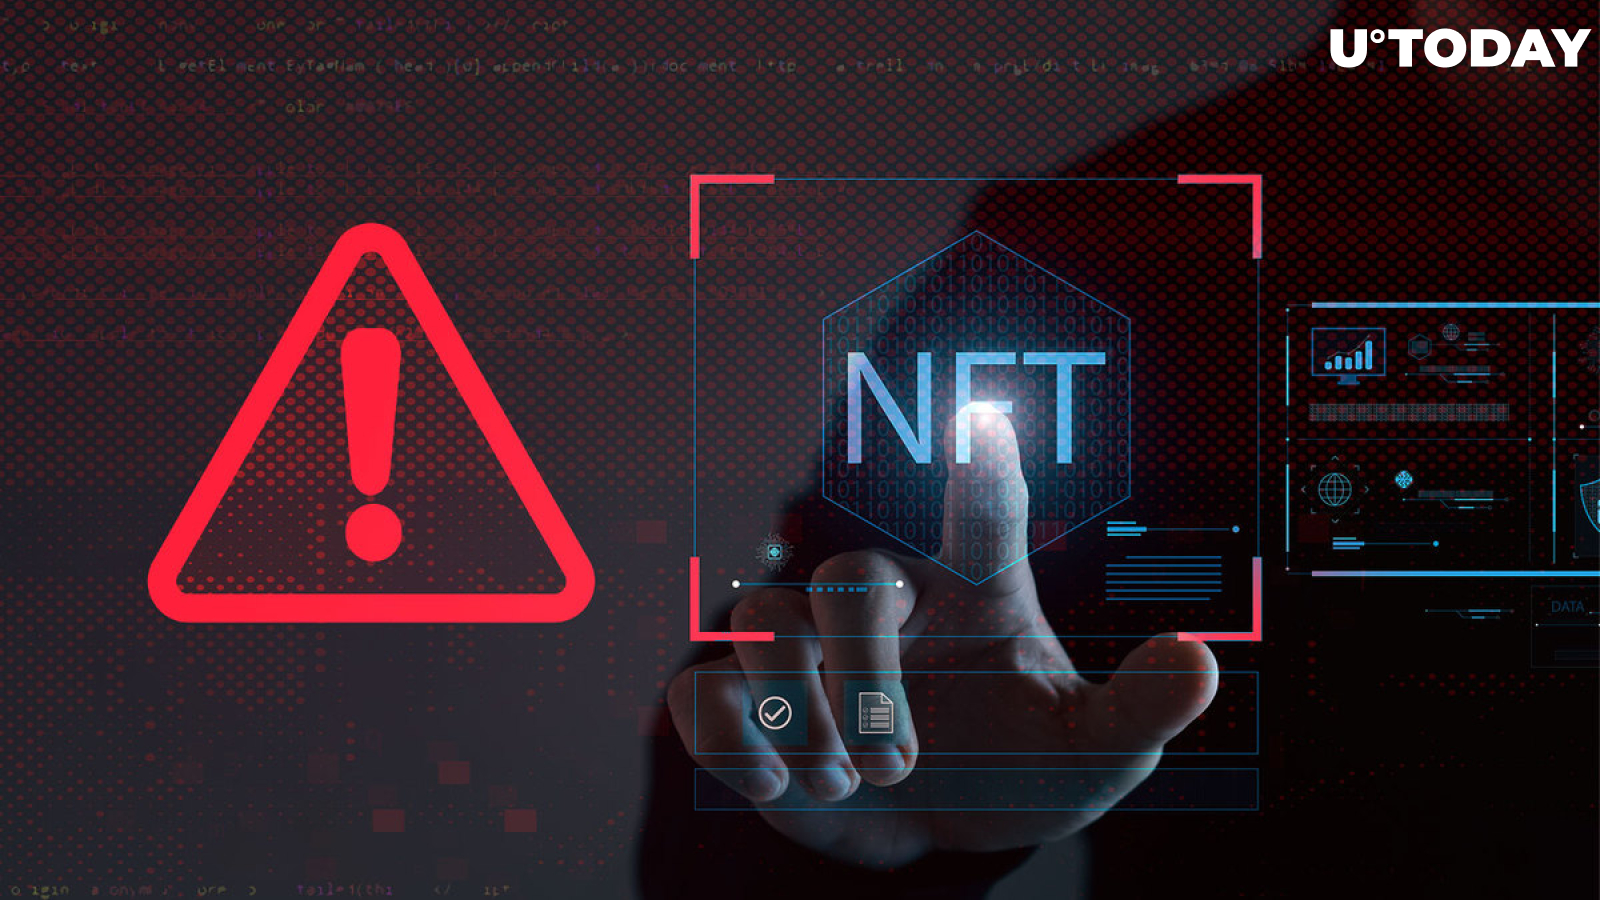 Hack Alert: Top NFT Community Under Attack